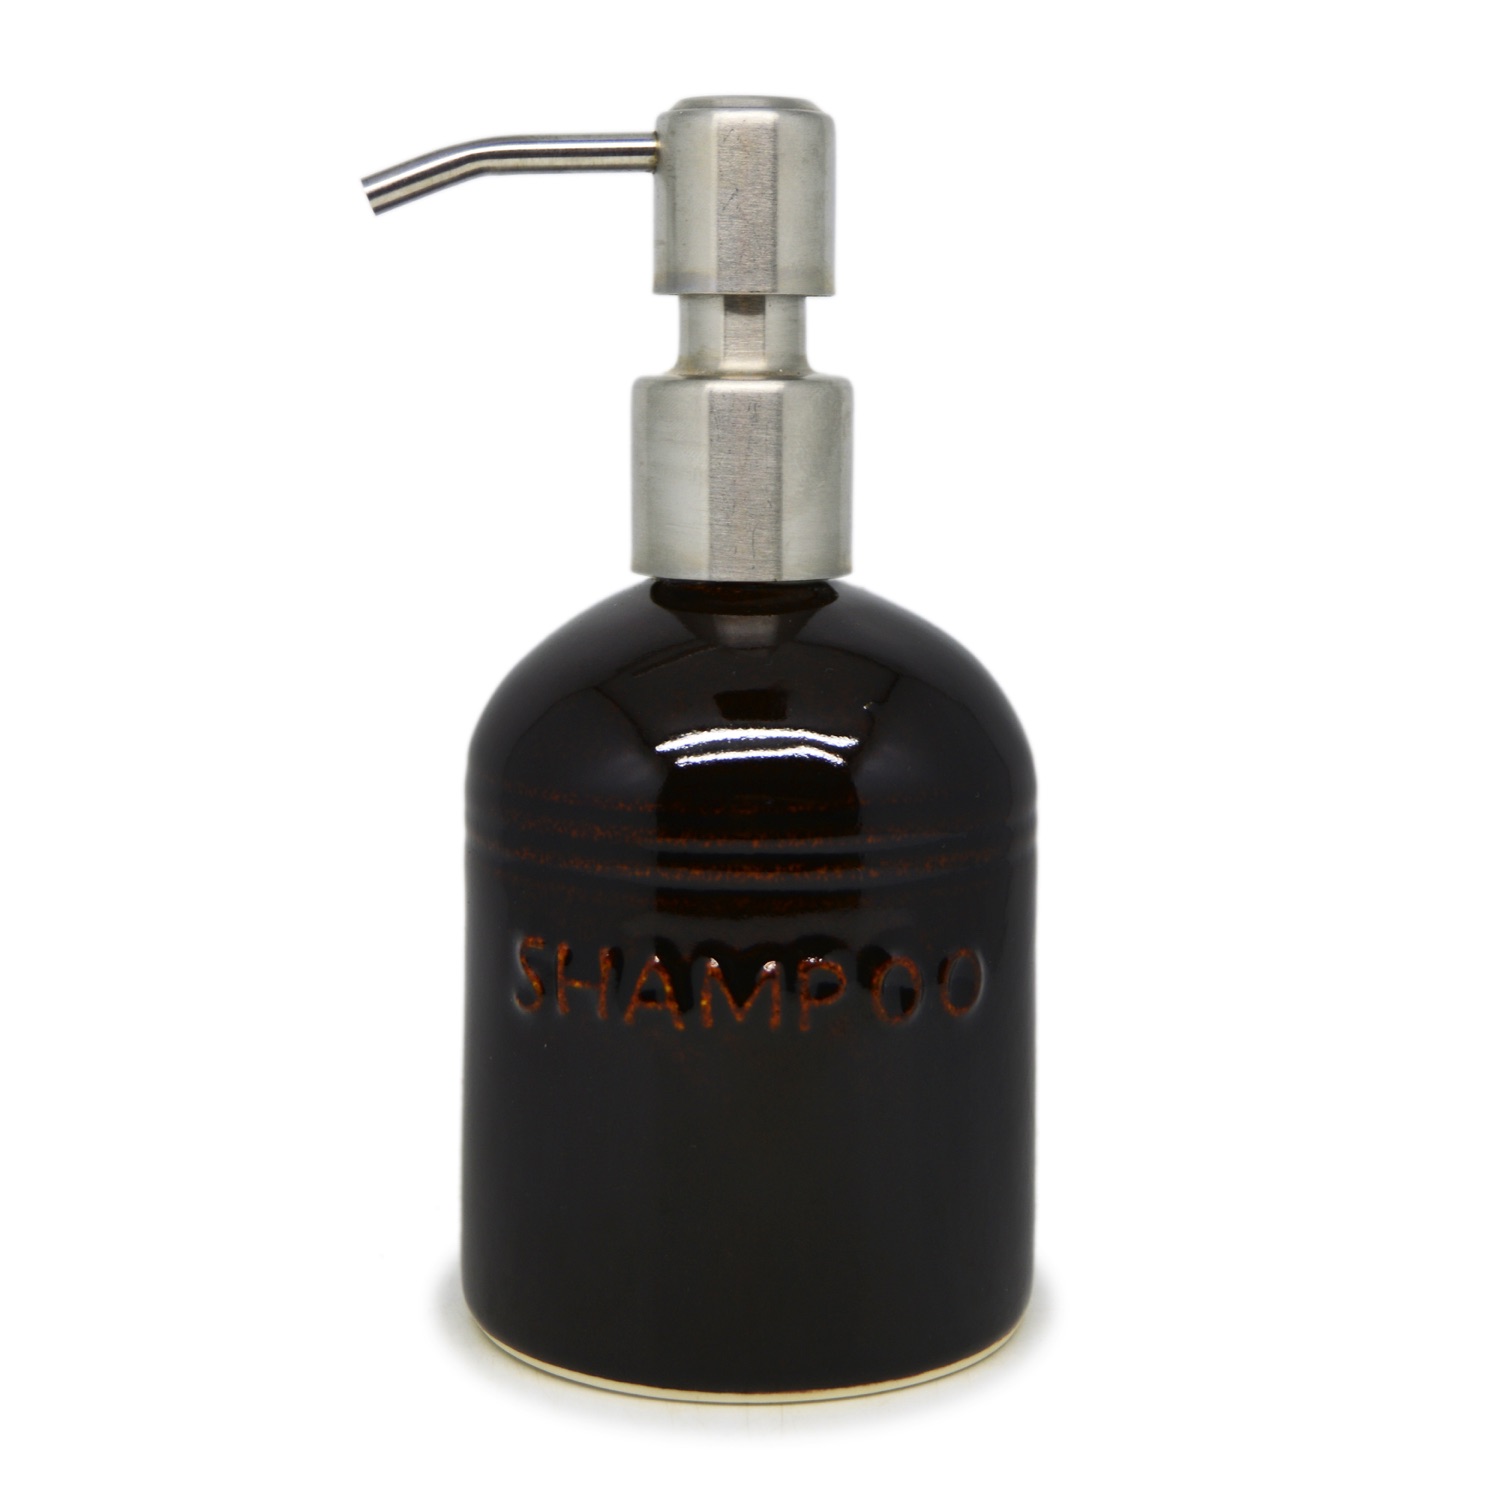 Liquid Dispenser S2 - Shampoo - Stainless Steel Pump